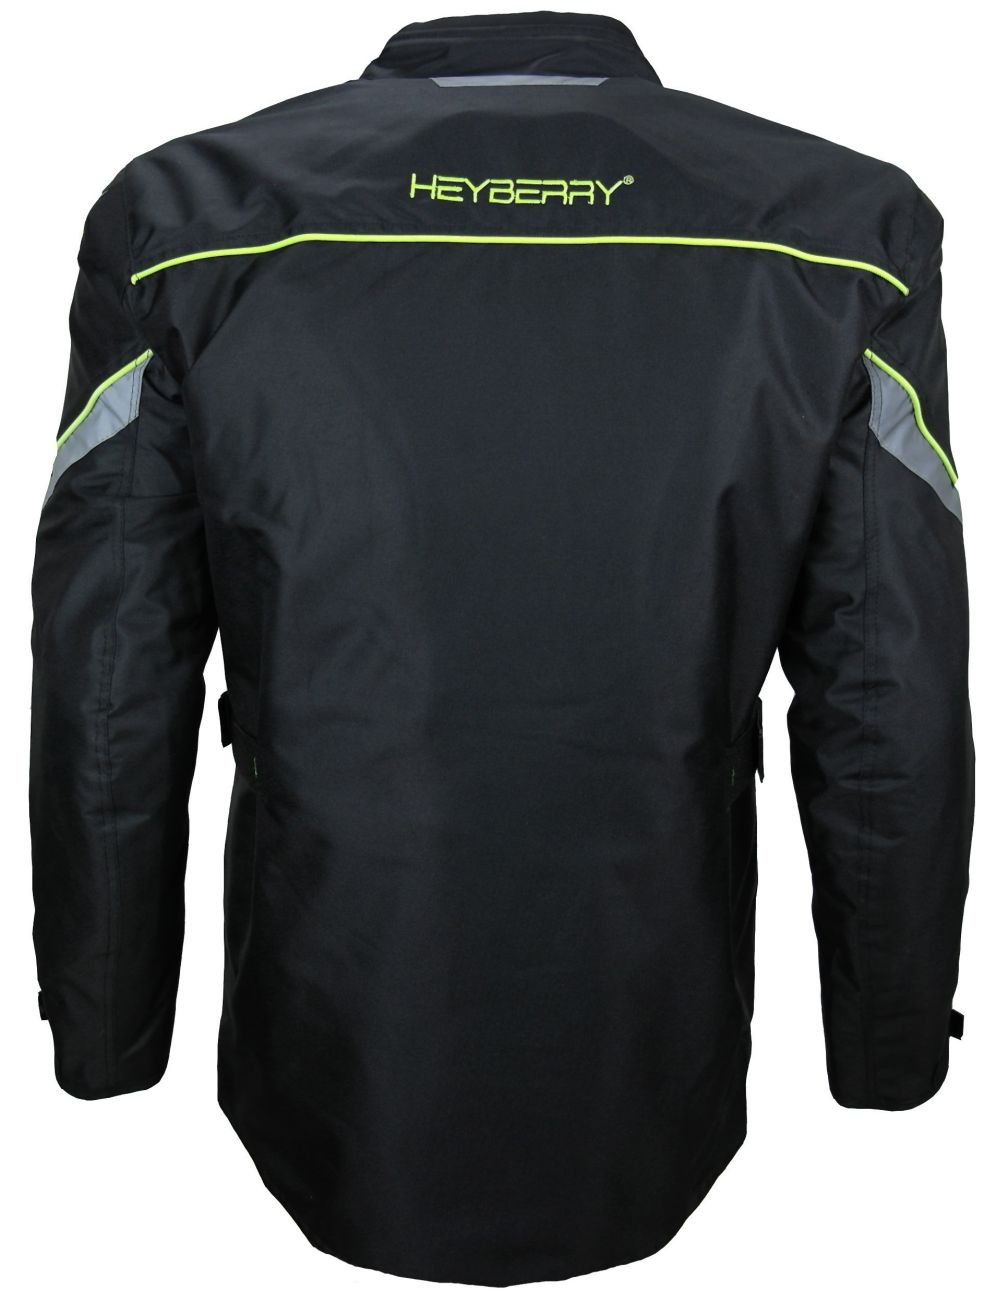 Heyberry Textil Touren Motorradjacke Motorrad Jacke schwarz neon Gr. M-3XL